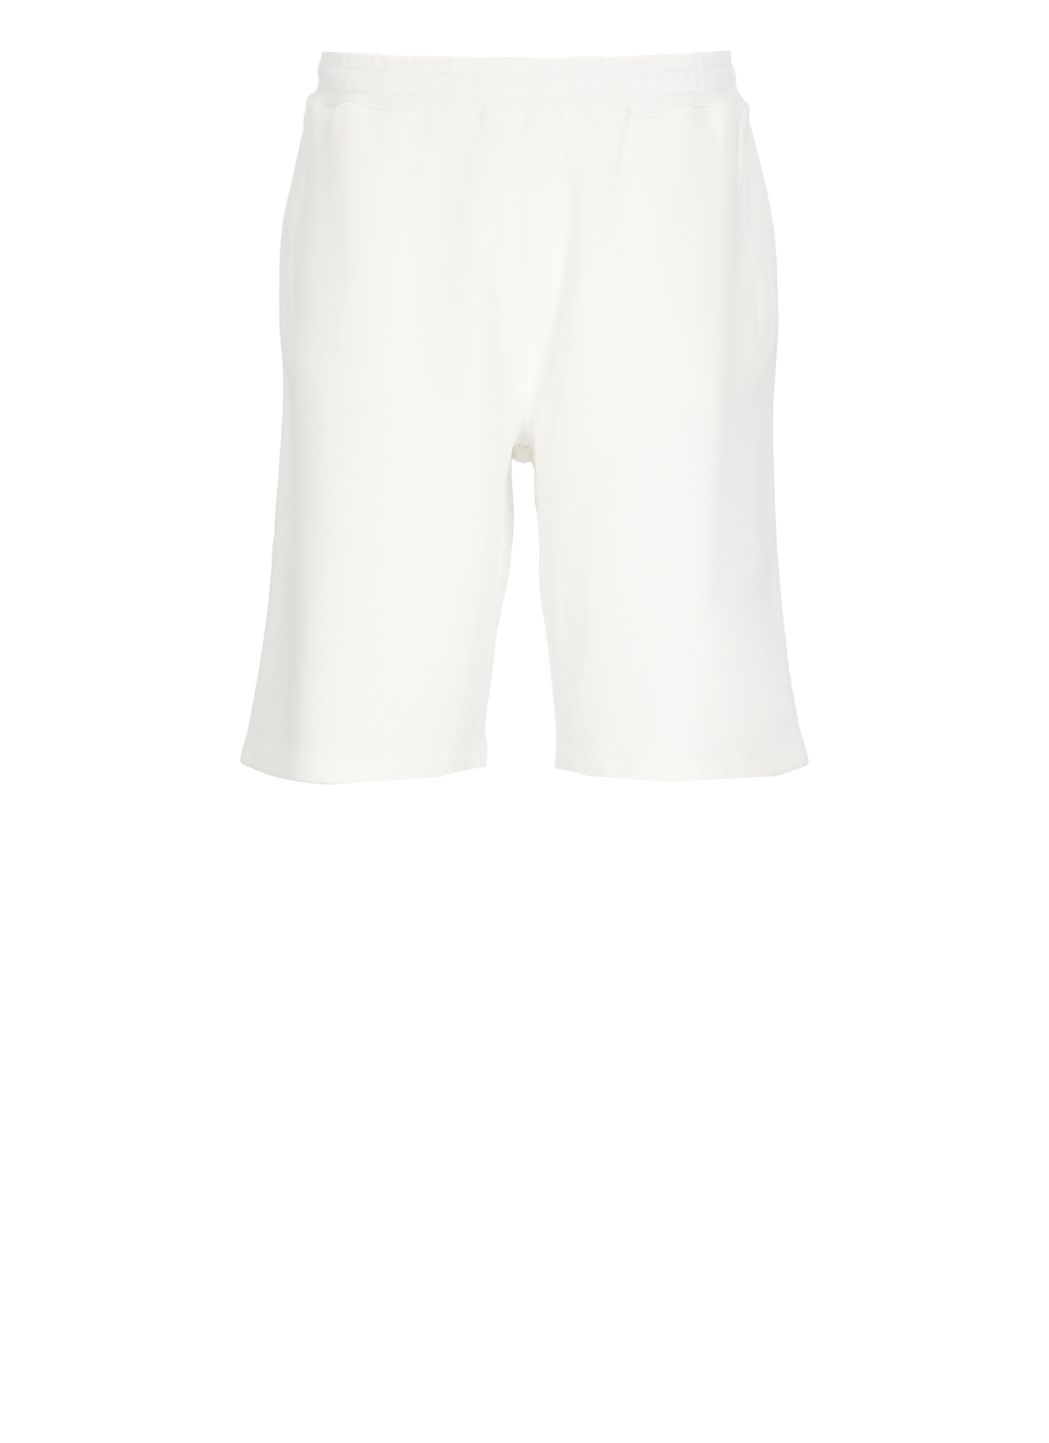 Bermuda shorts with print